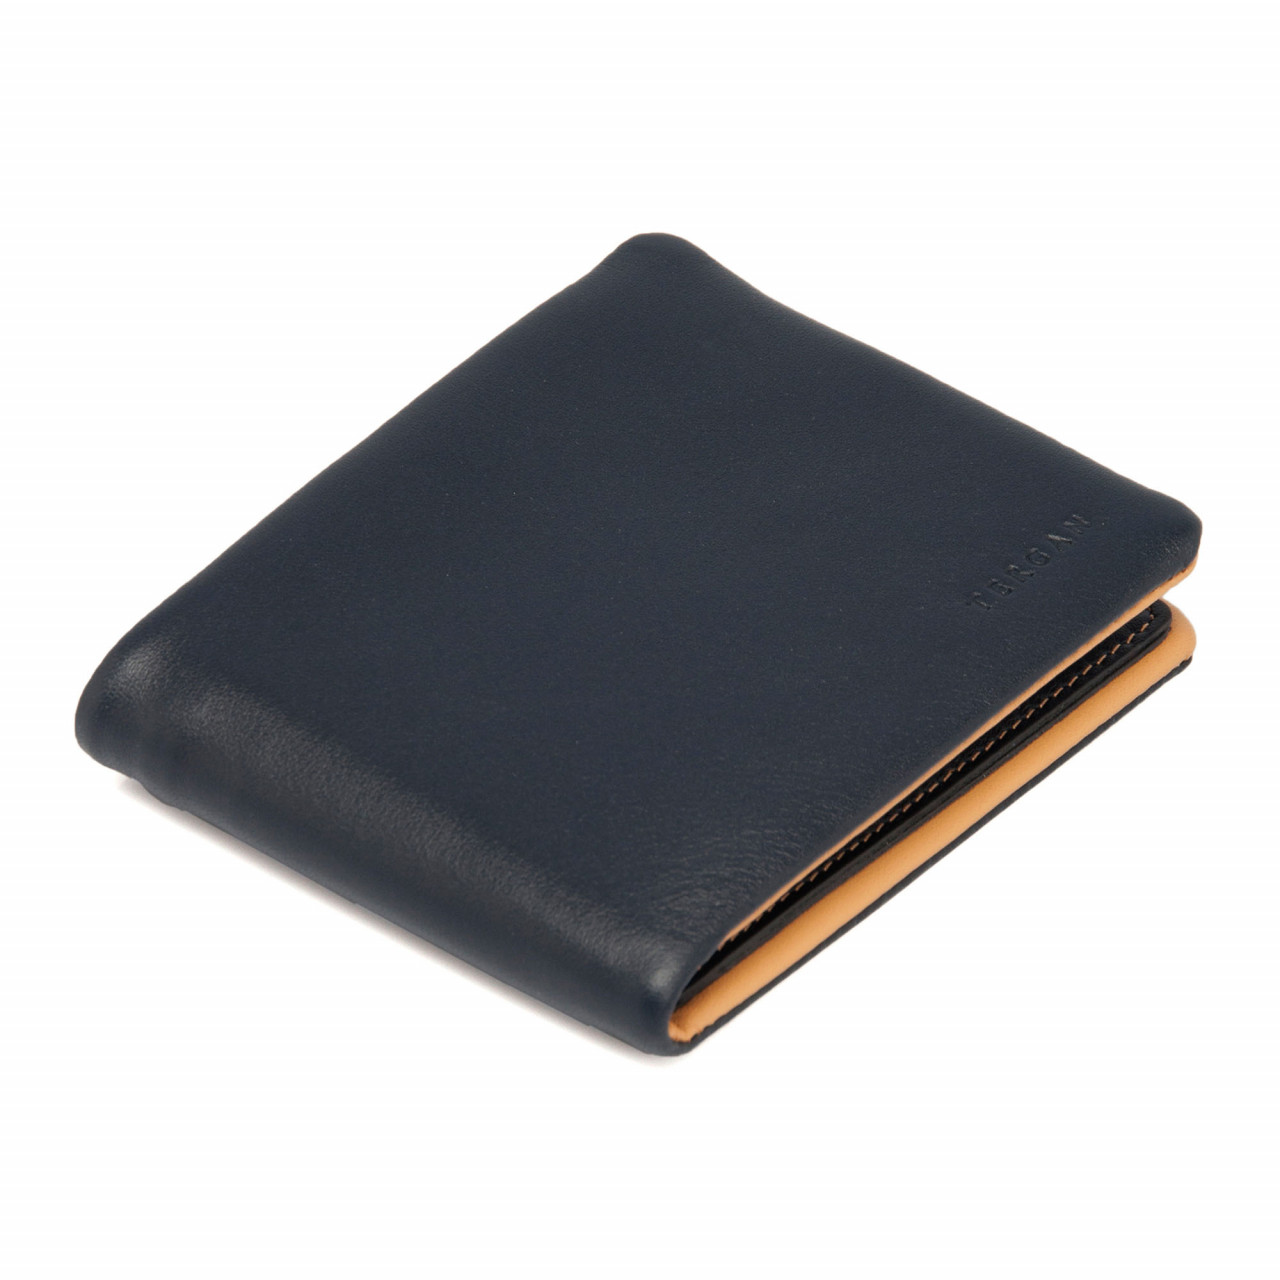 Polished leather wallet